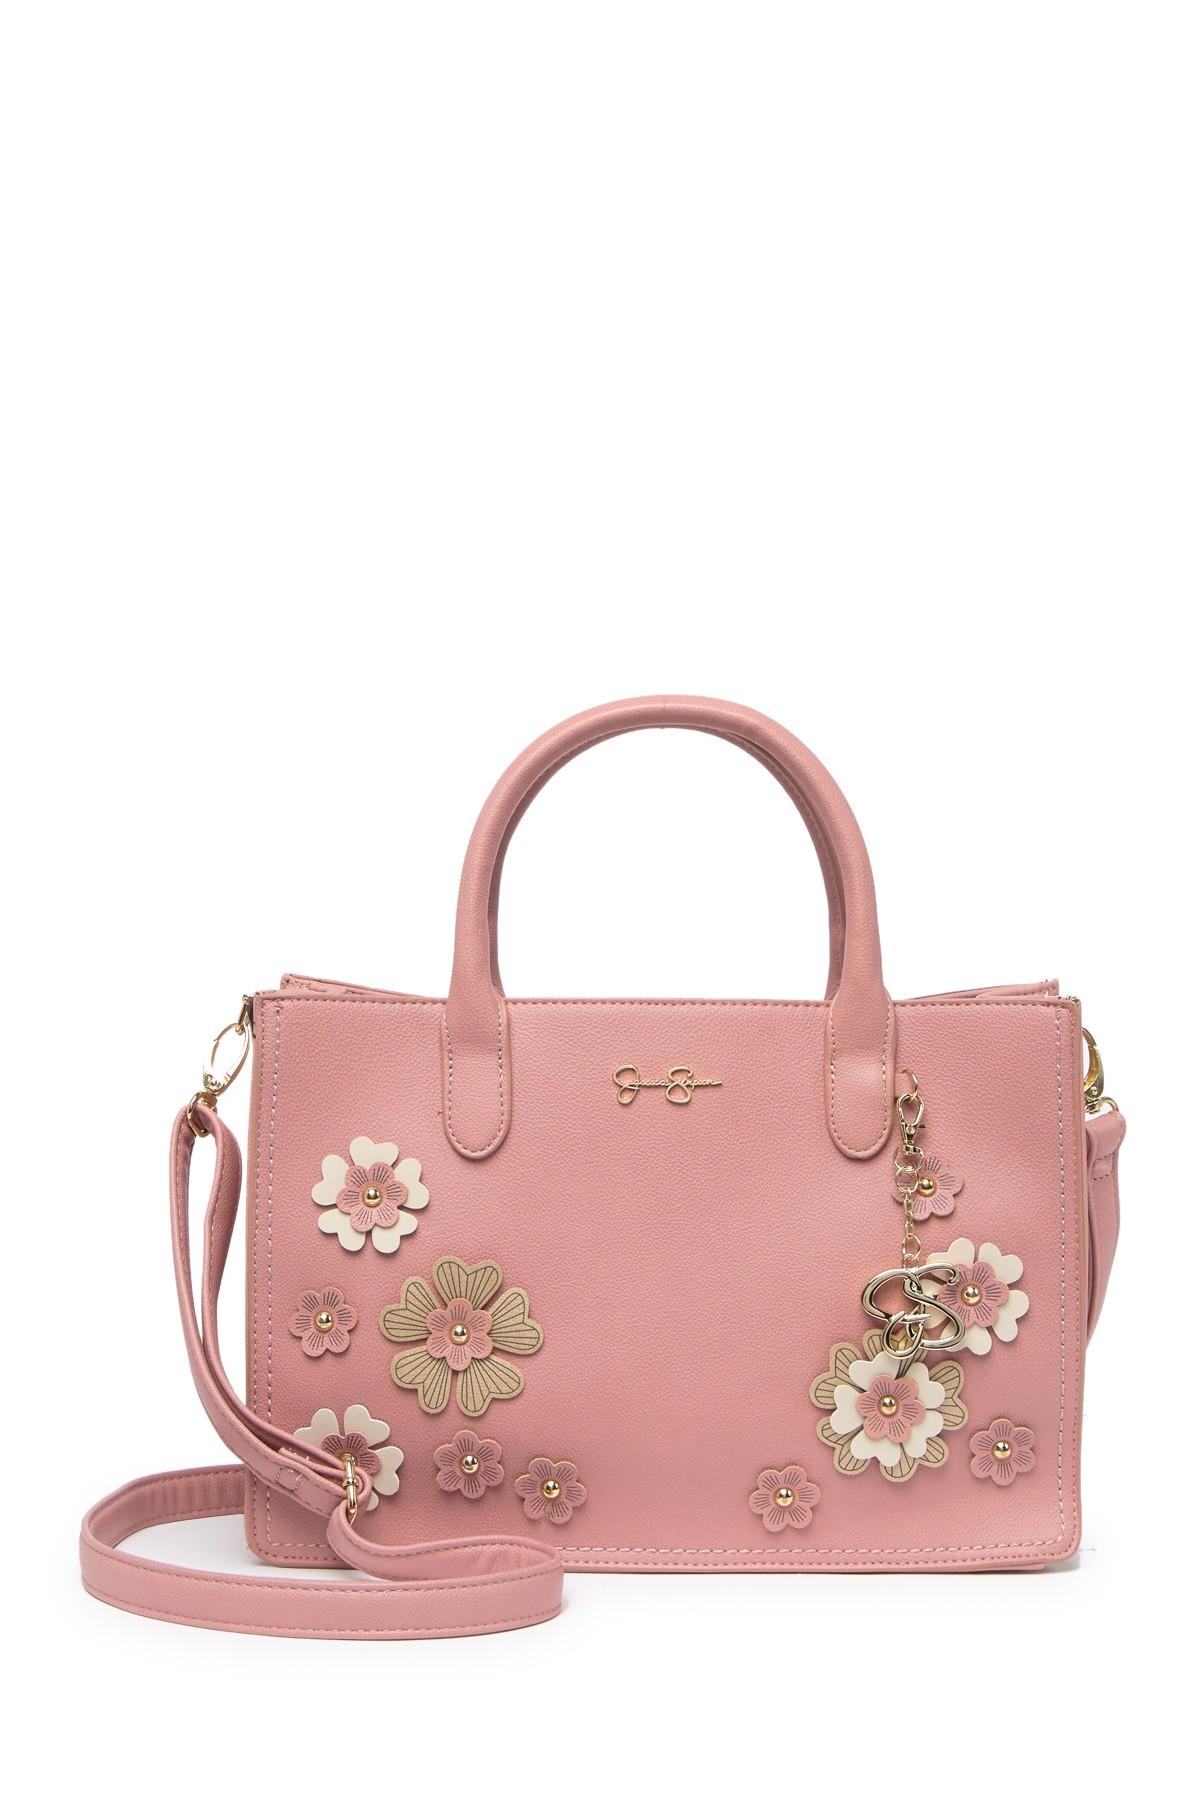 Jessica Simpson Handbags